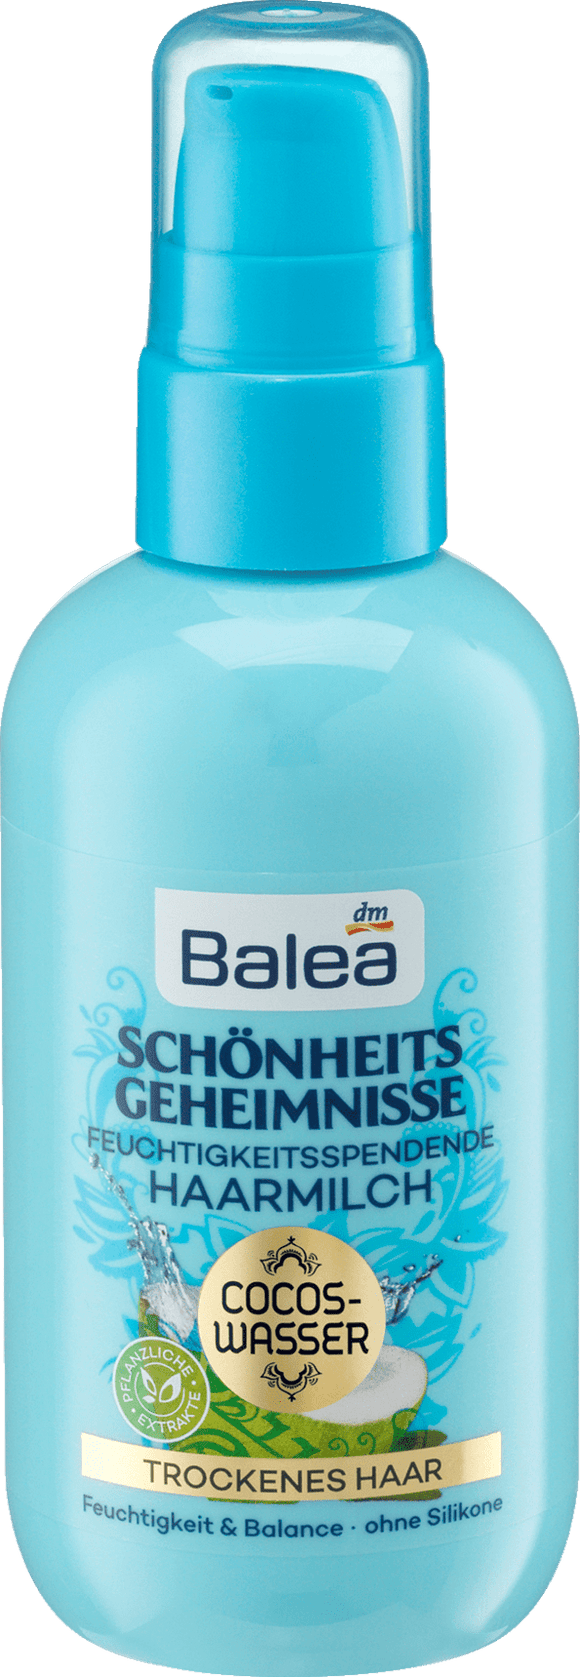 Balea Schönheitsgeheimnisse moisturizing hair lotion, 200 ml